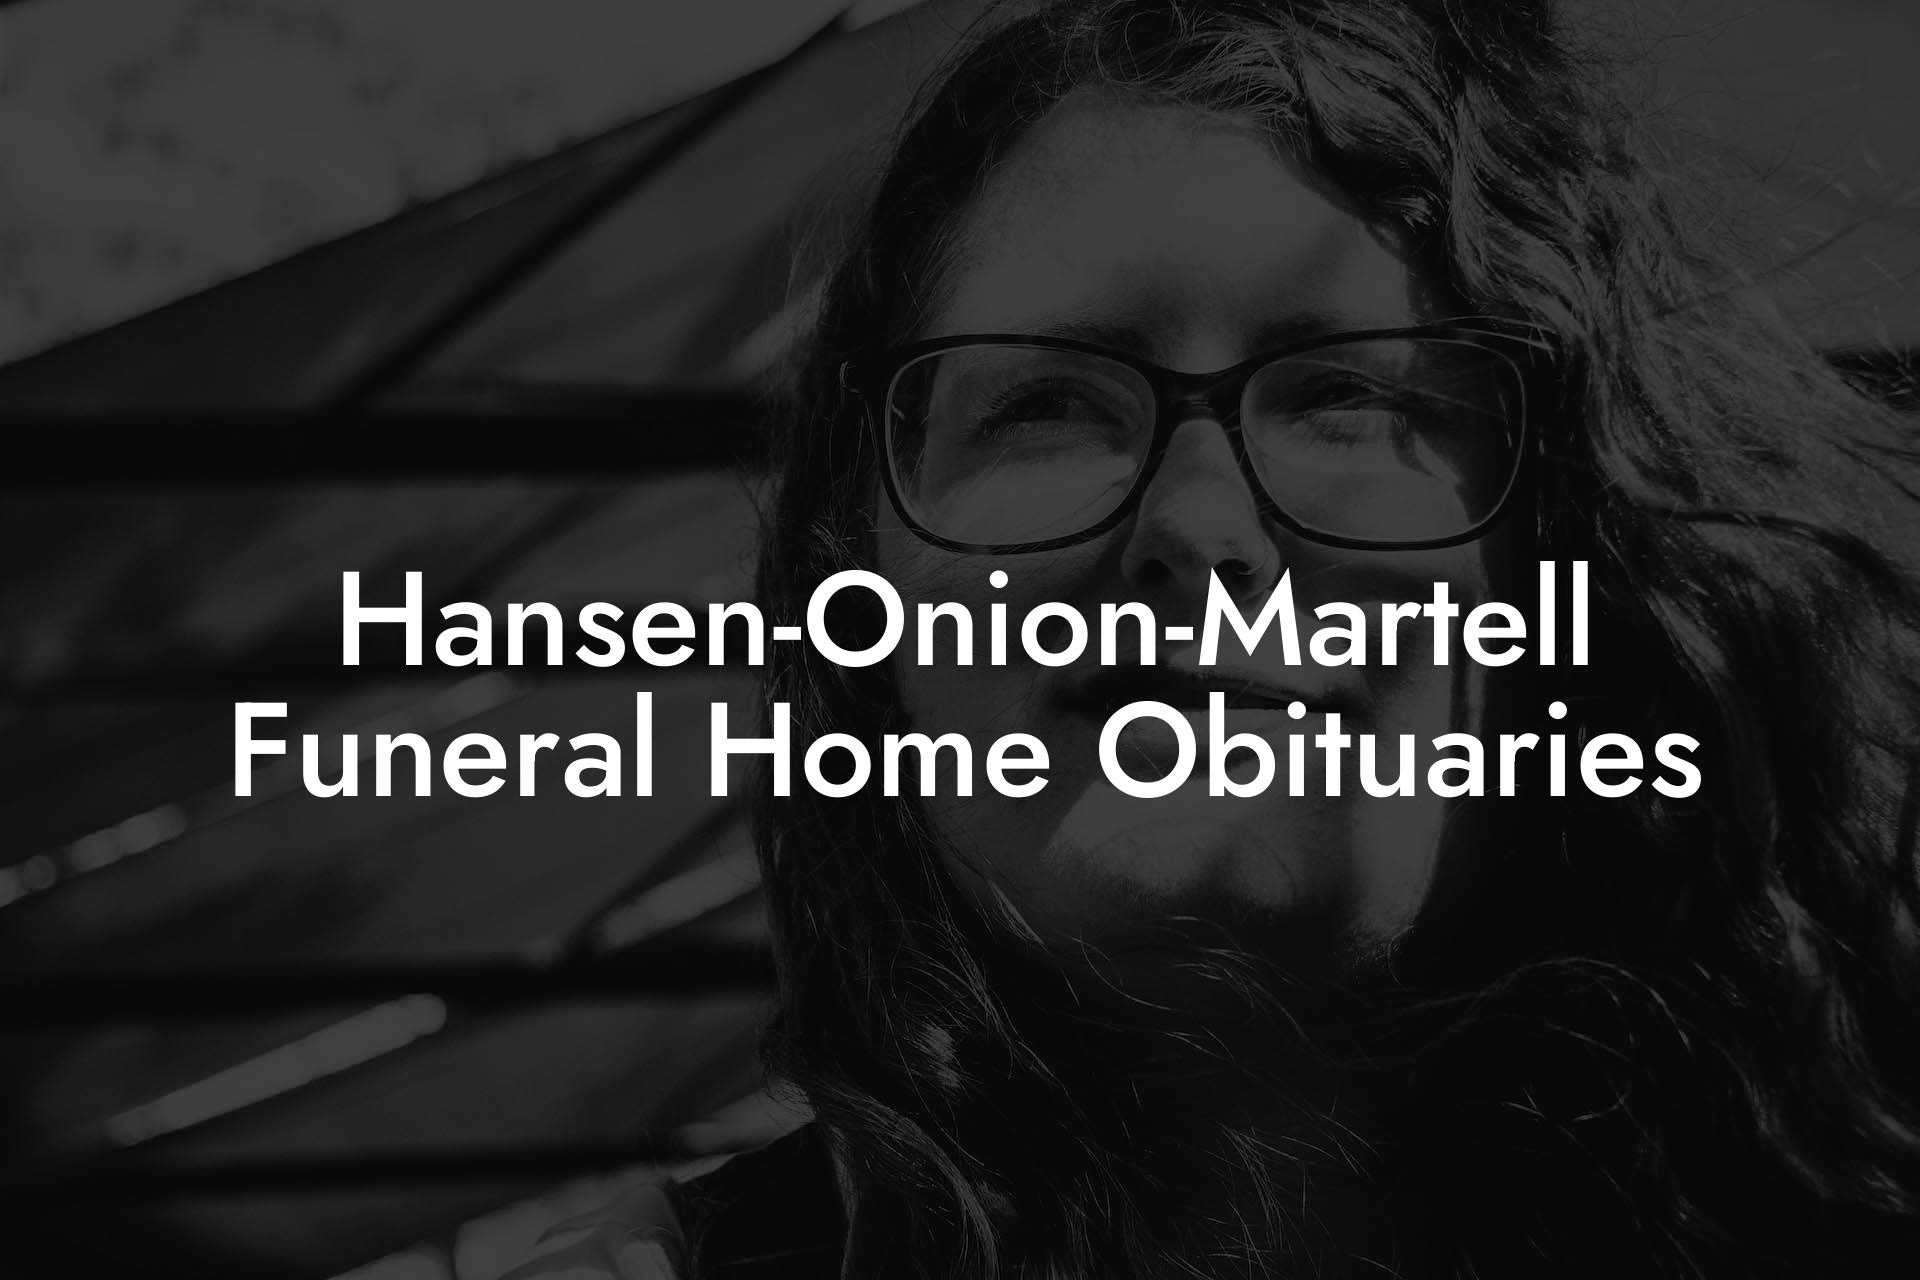 Hansen-Onion-Martell Funeral Home Obituaries